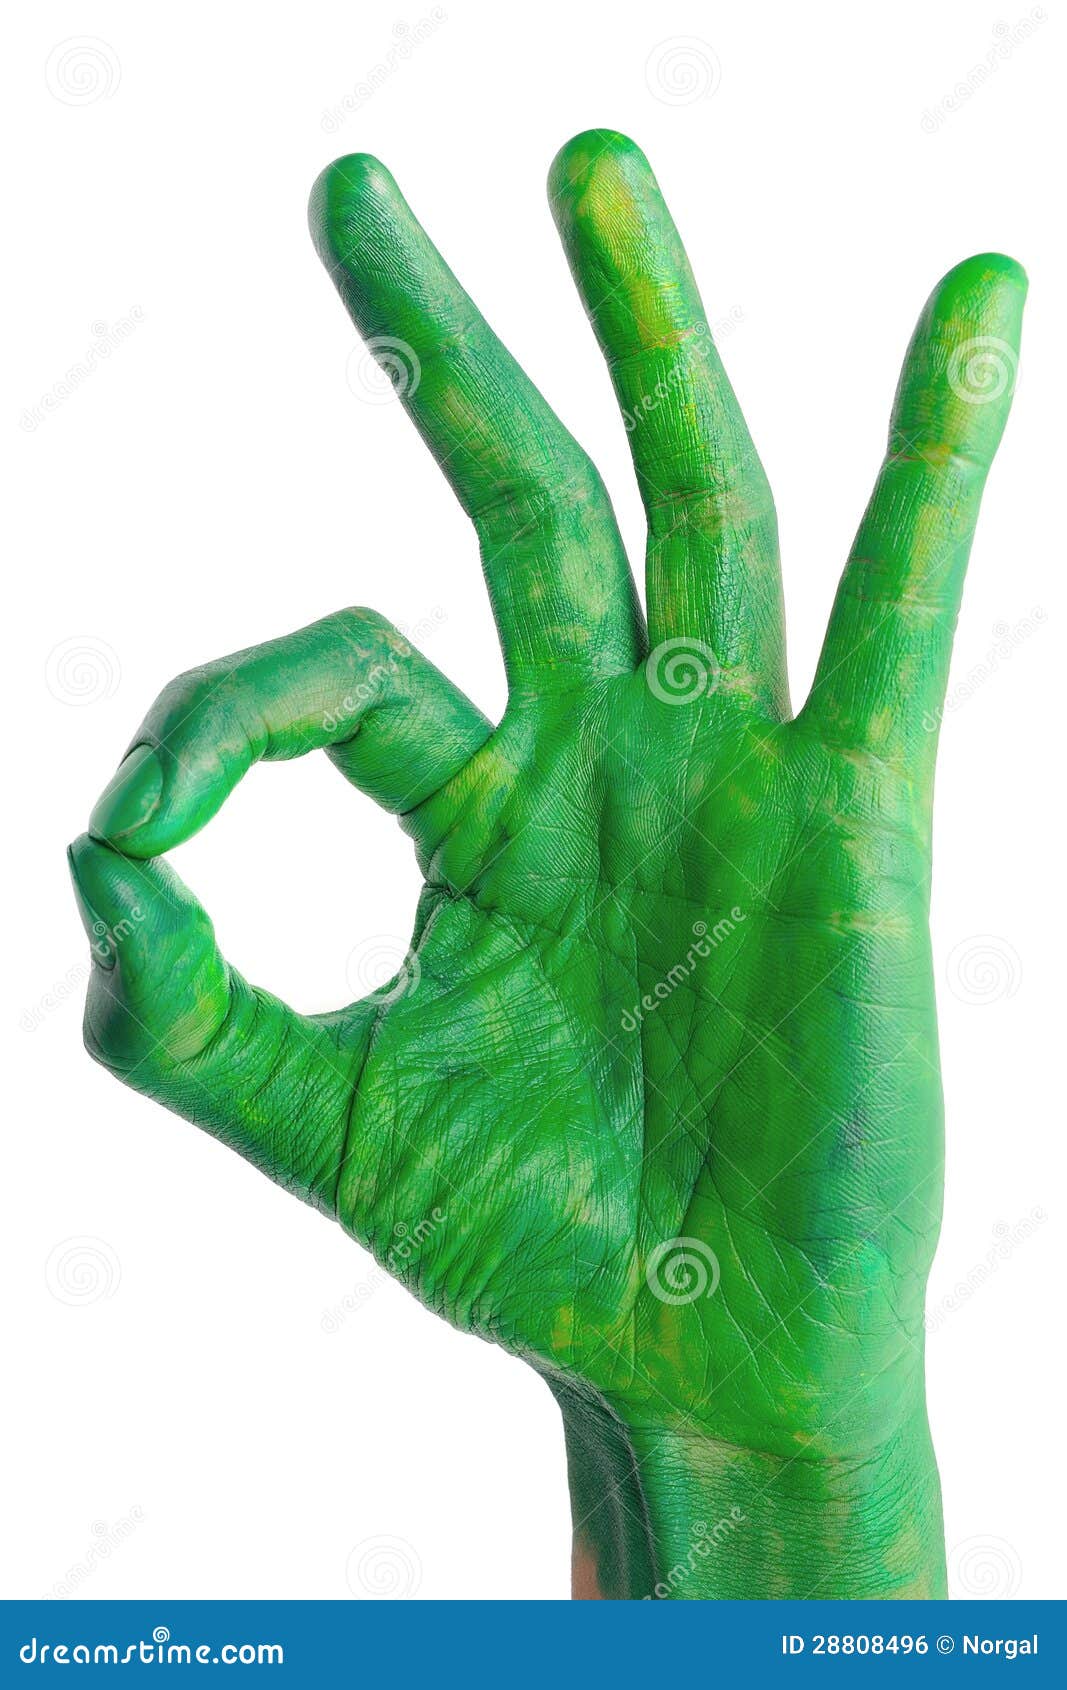 Правая рука зеленая. Зеленая рука. Позеленела рука. Зеленые руки на белом фоне. Зеленая ладонь на белом фоне.